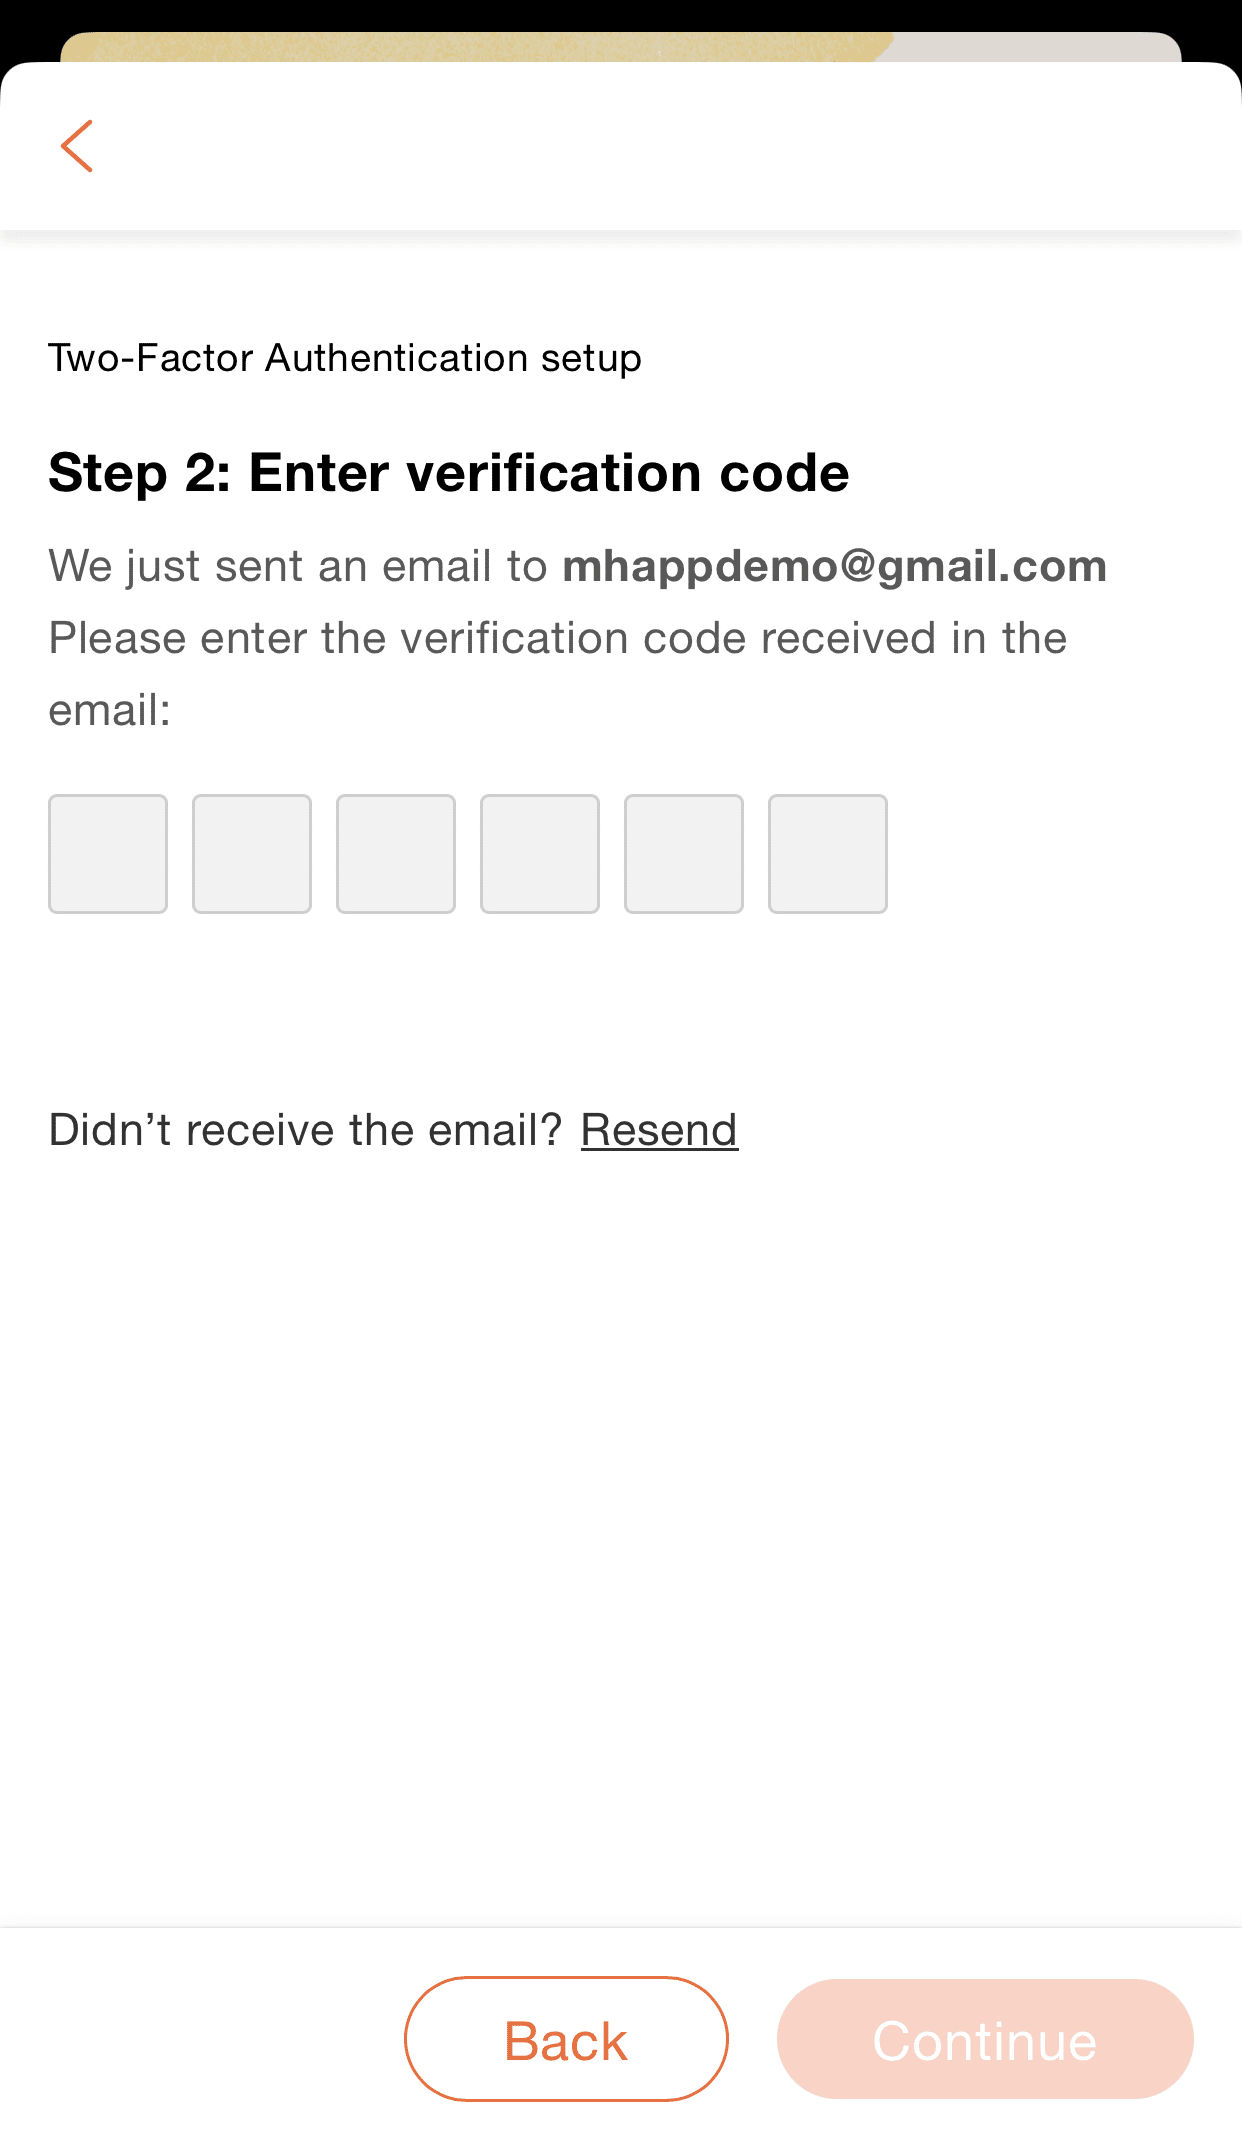 Entering the verification code sent via email